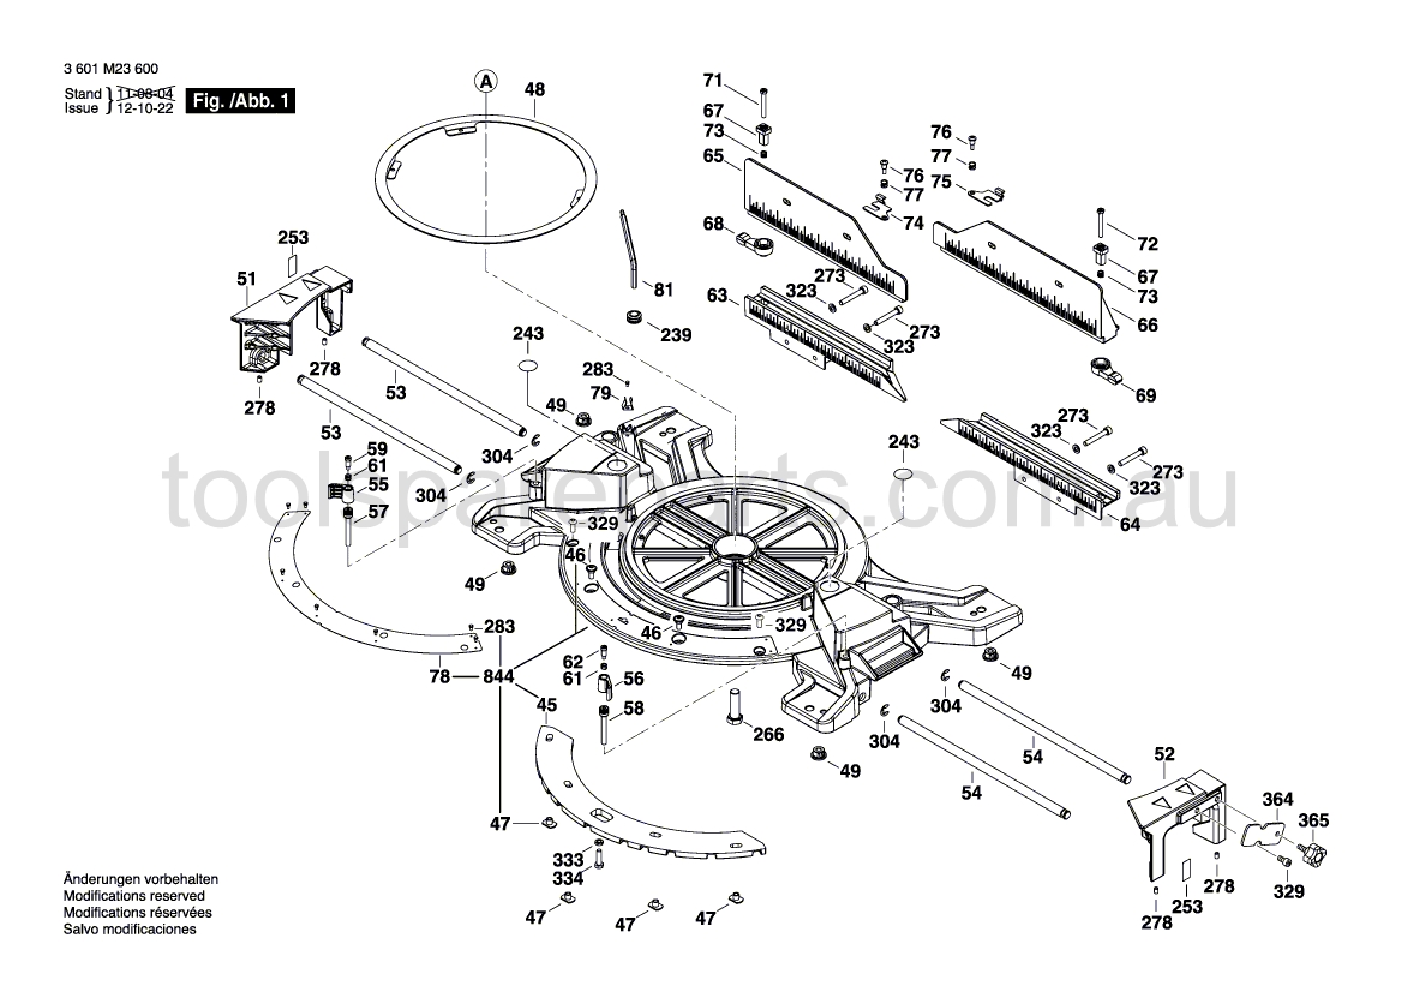 Bosch GCM 12 GDL 3601M23640  Diagram 1